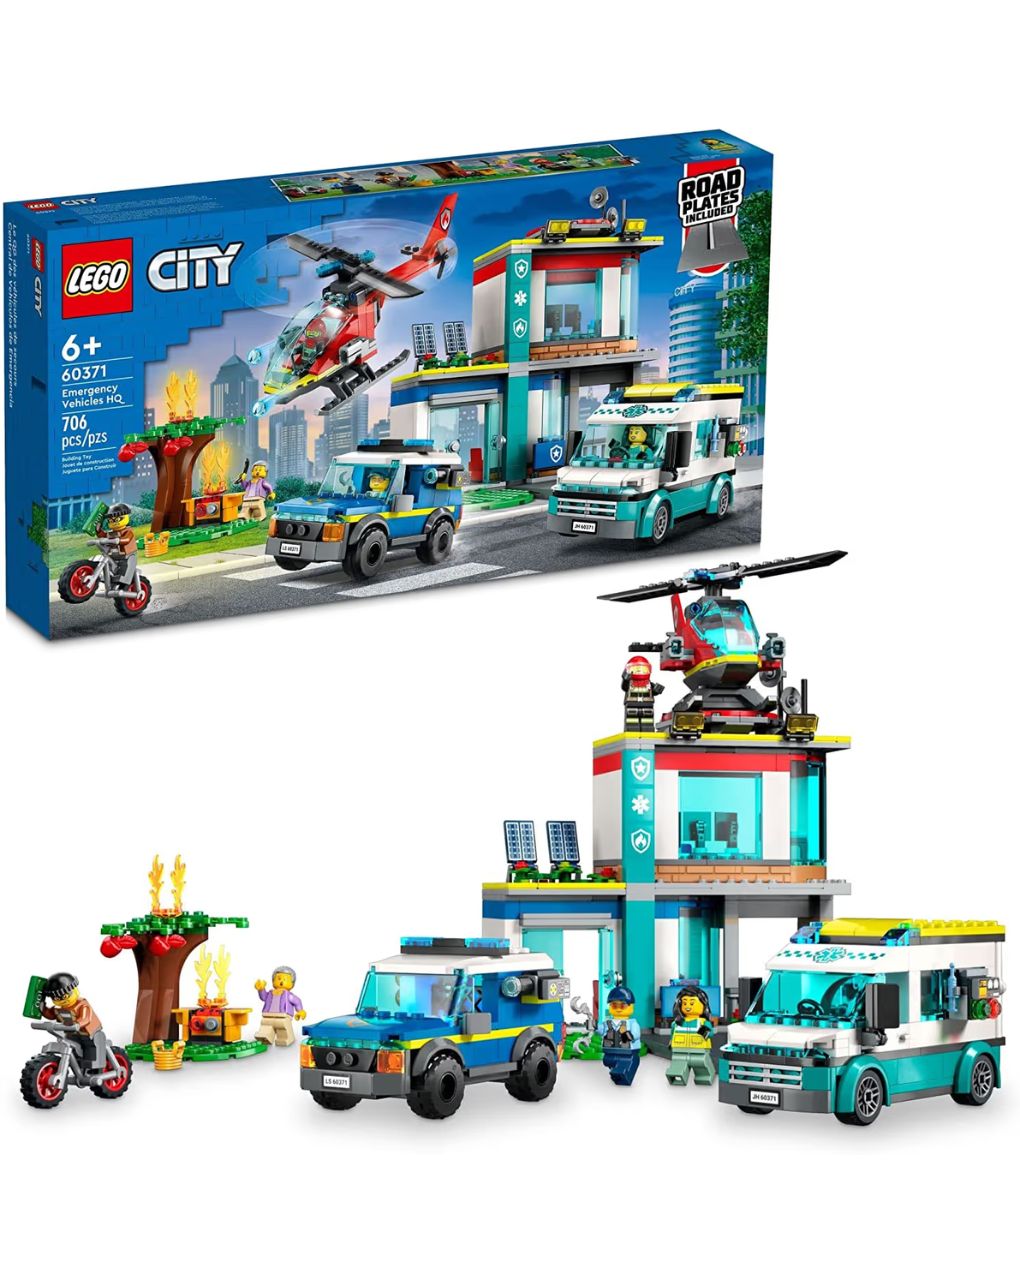 Lego city police emergency vehicles hq 60371